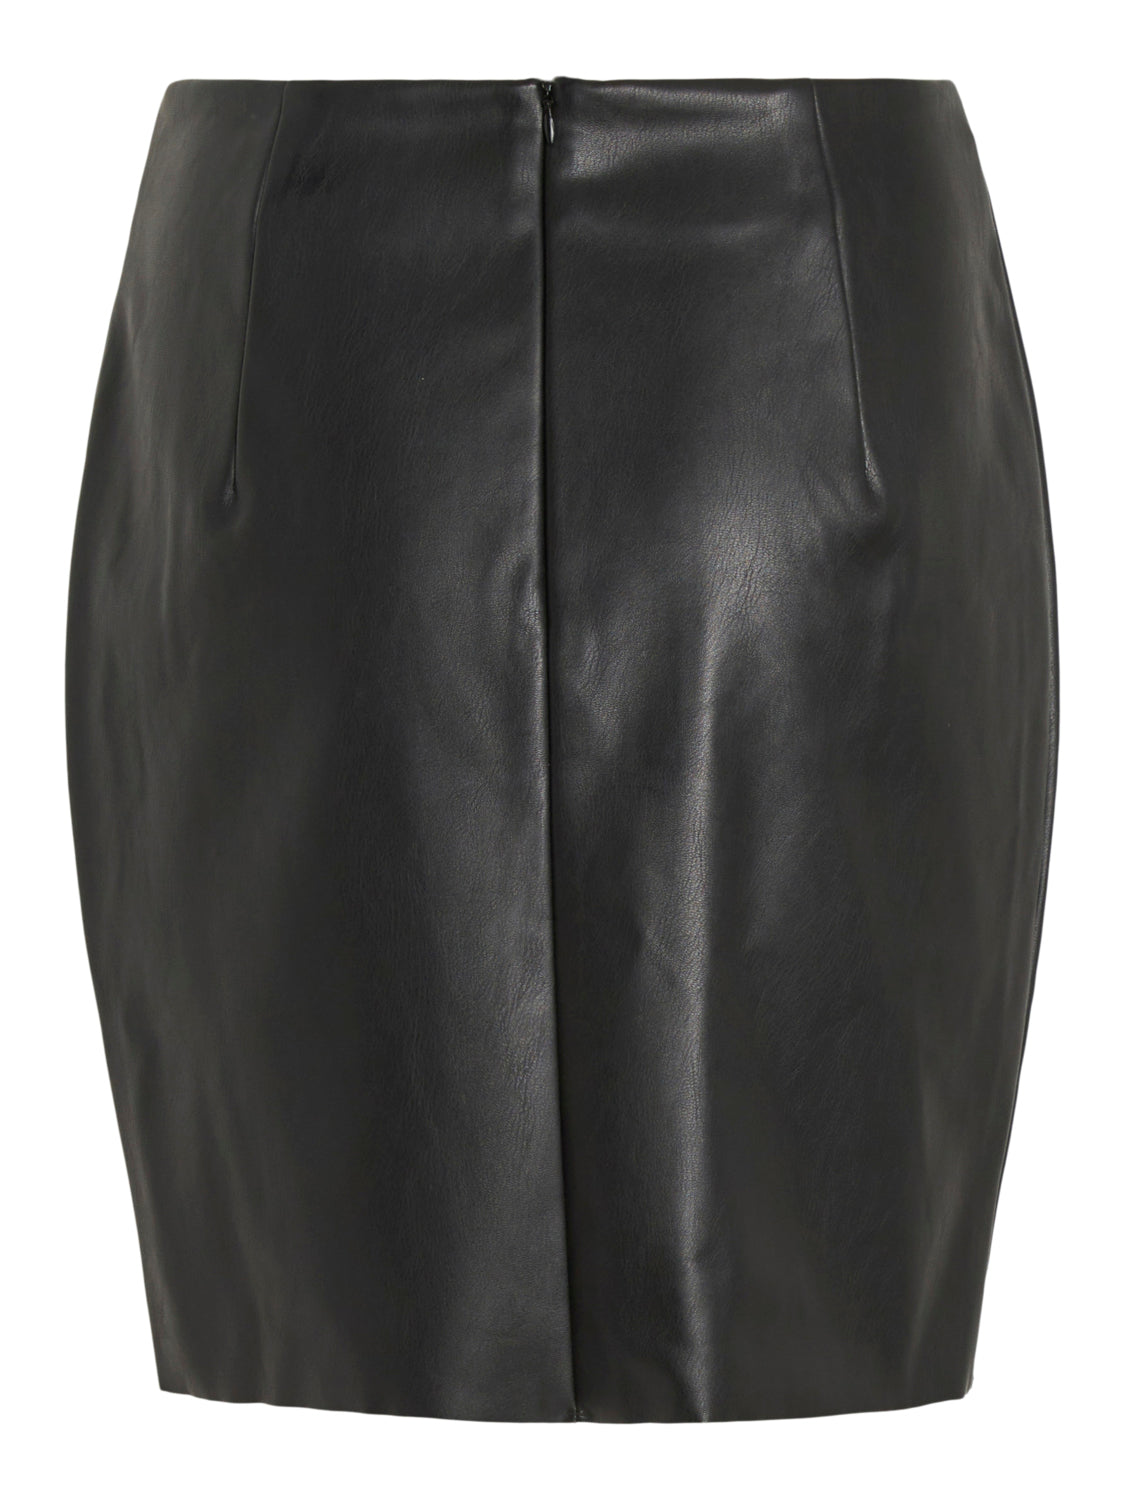 VIDAGMAR Skirt - Black